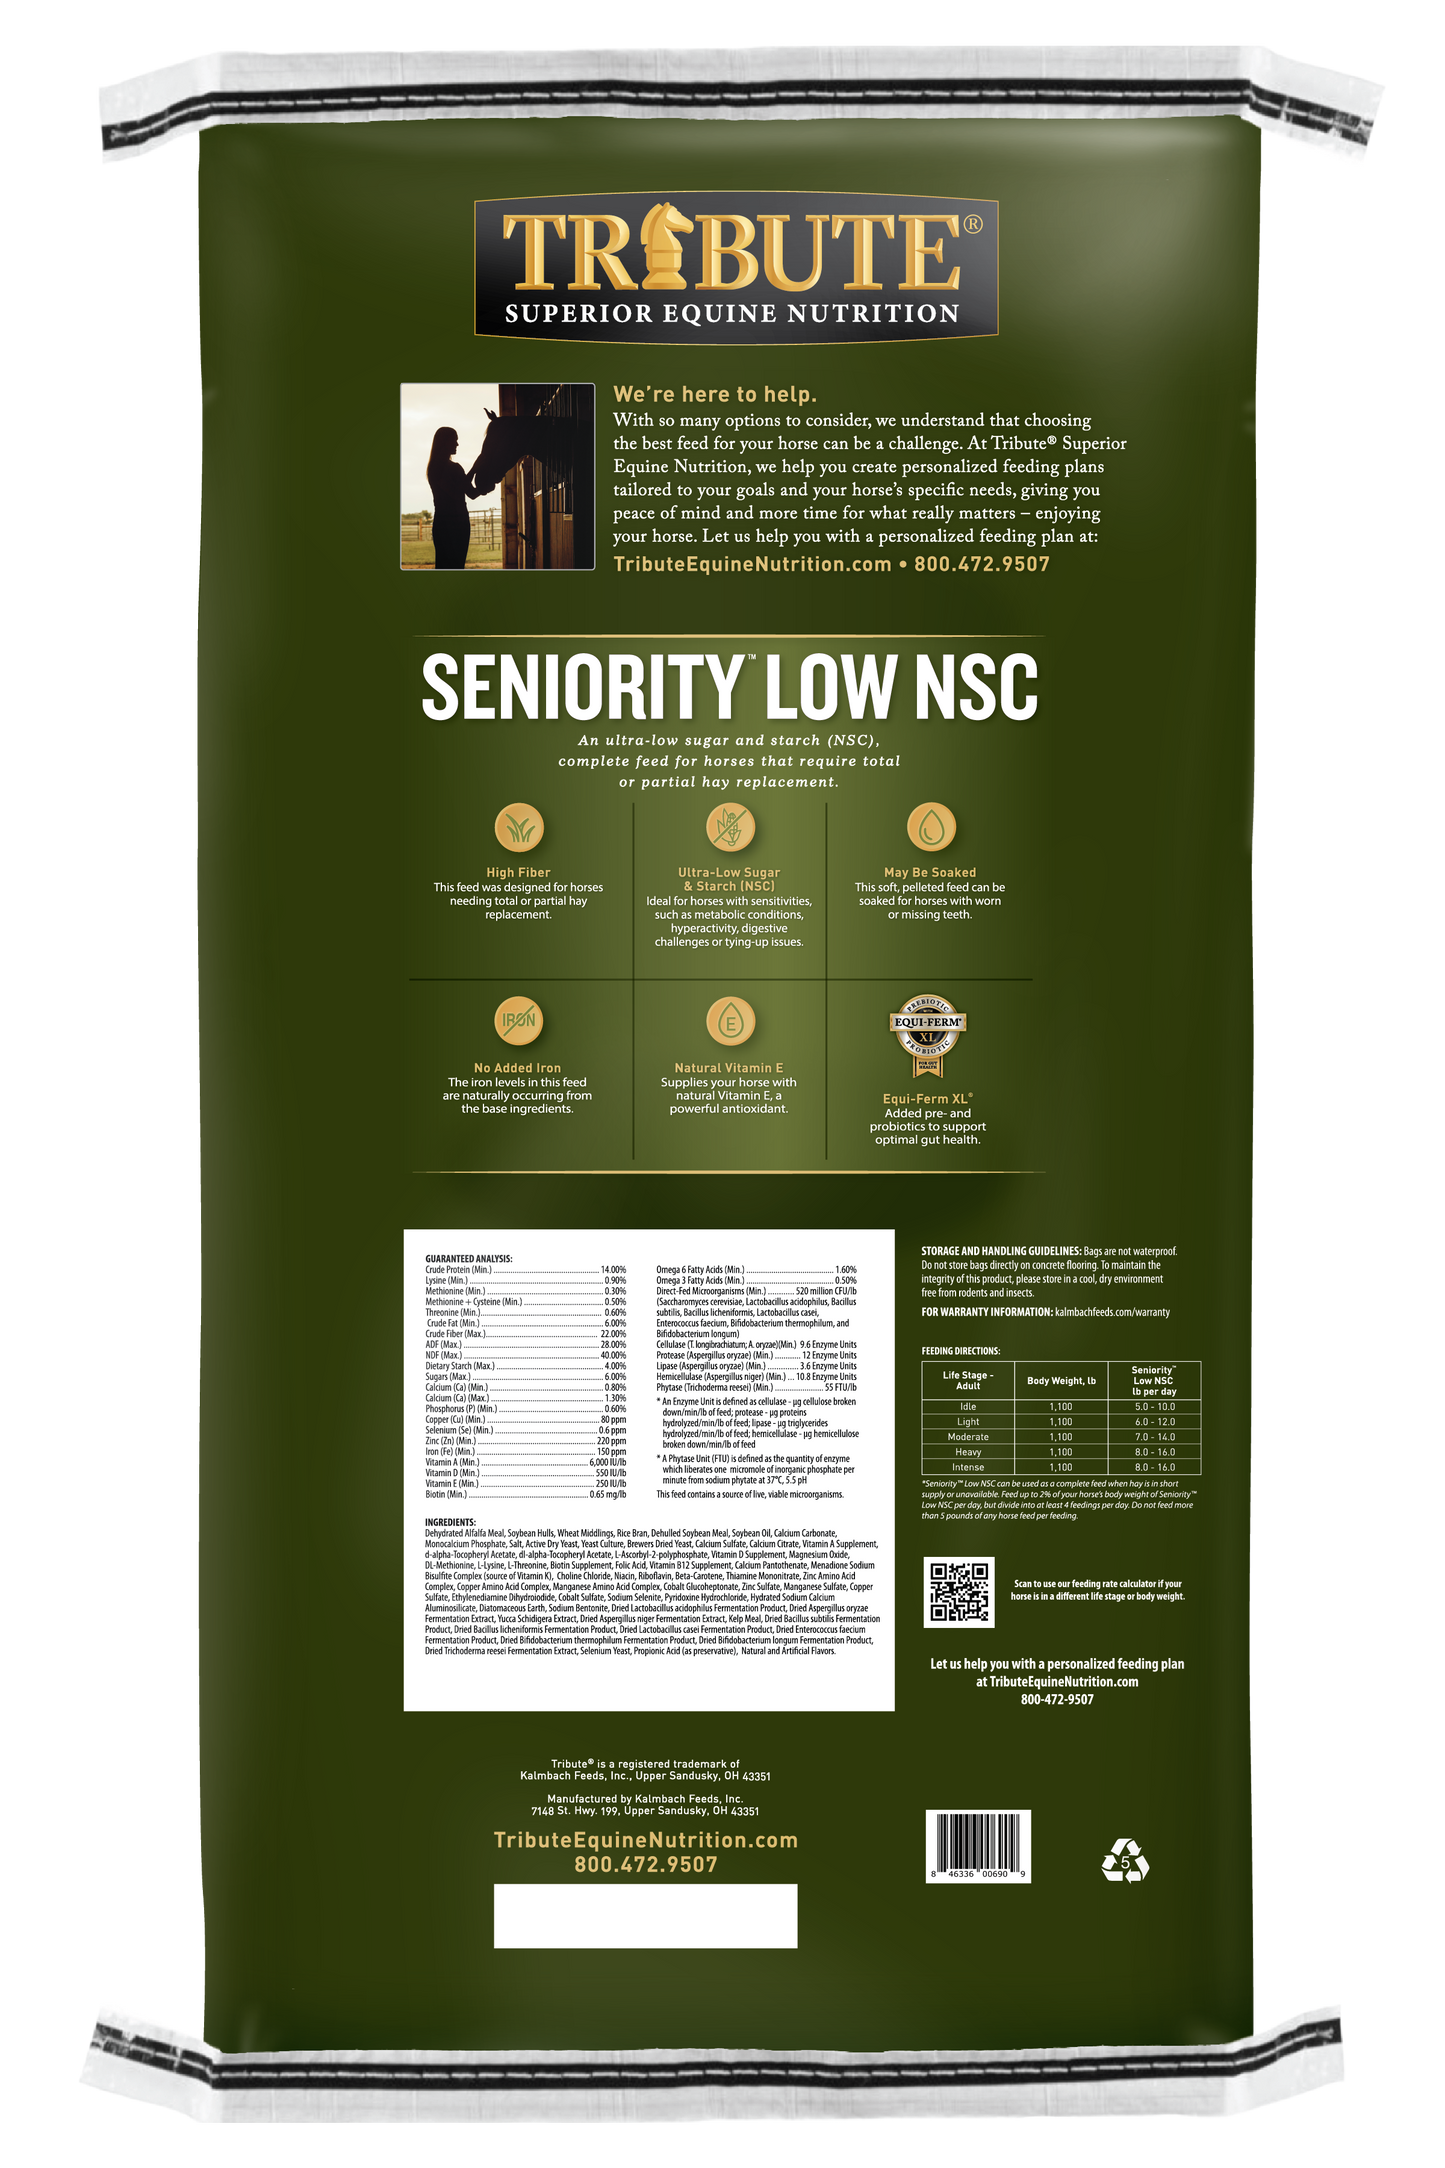 Seniority® Low NSC (10%), Horse Feed